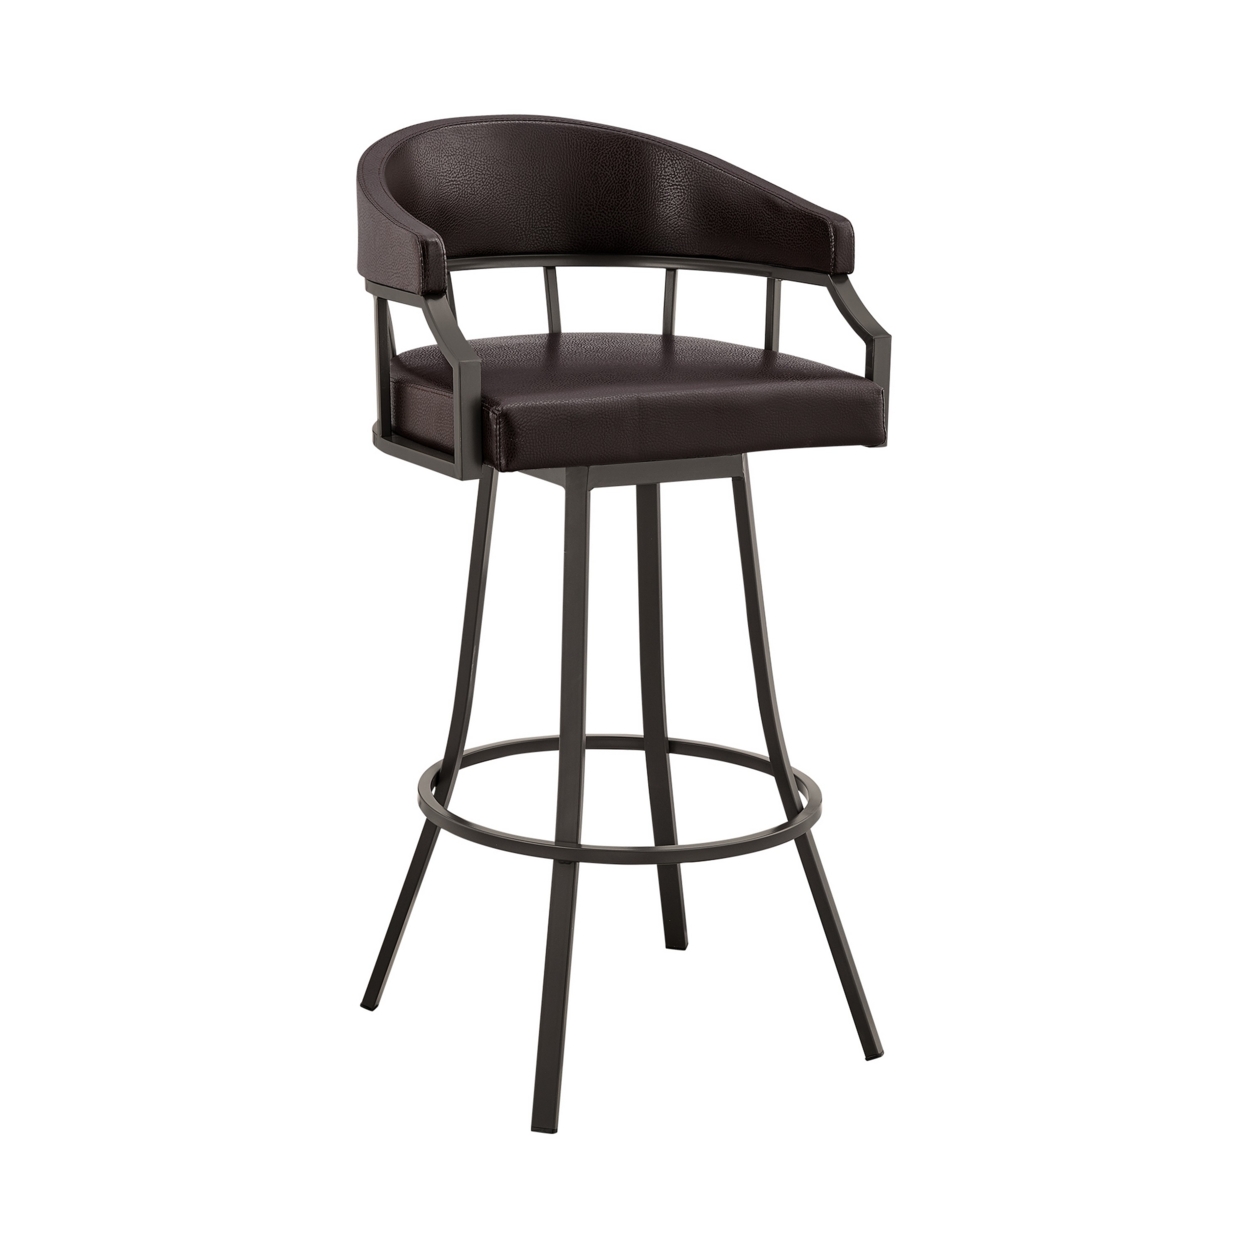 Cade 30 Inch Bar Stool, Cushioned Seat, Swivel Chair, Faux Leather, Brown- Saltoro Sherpi